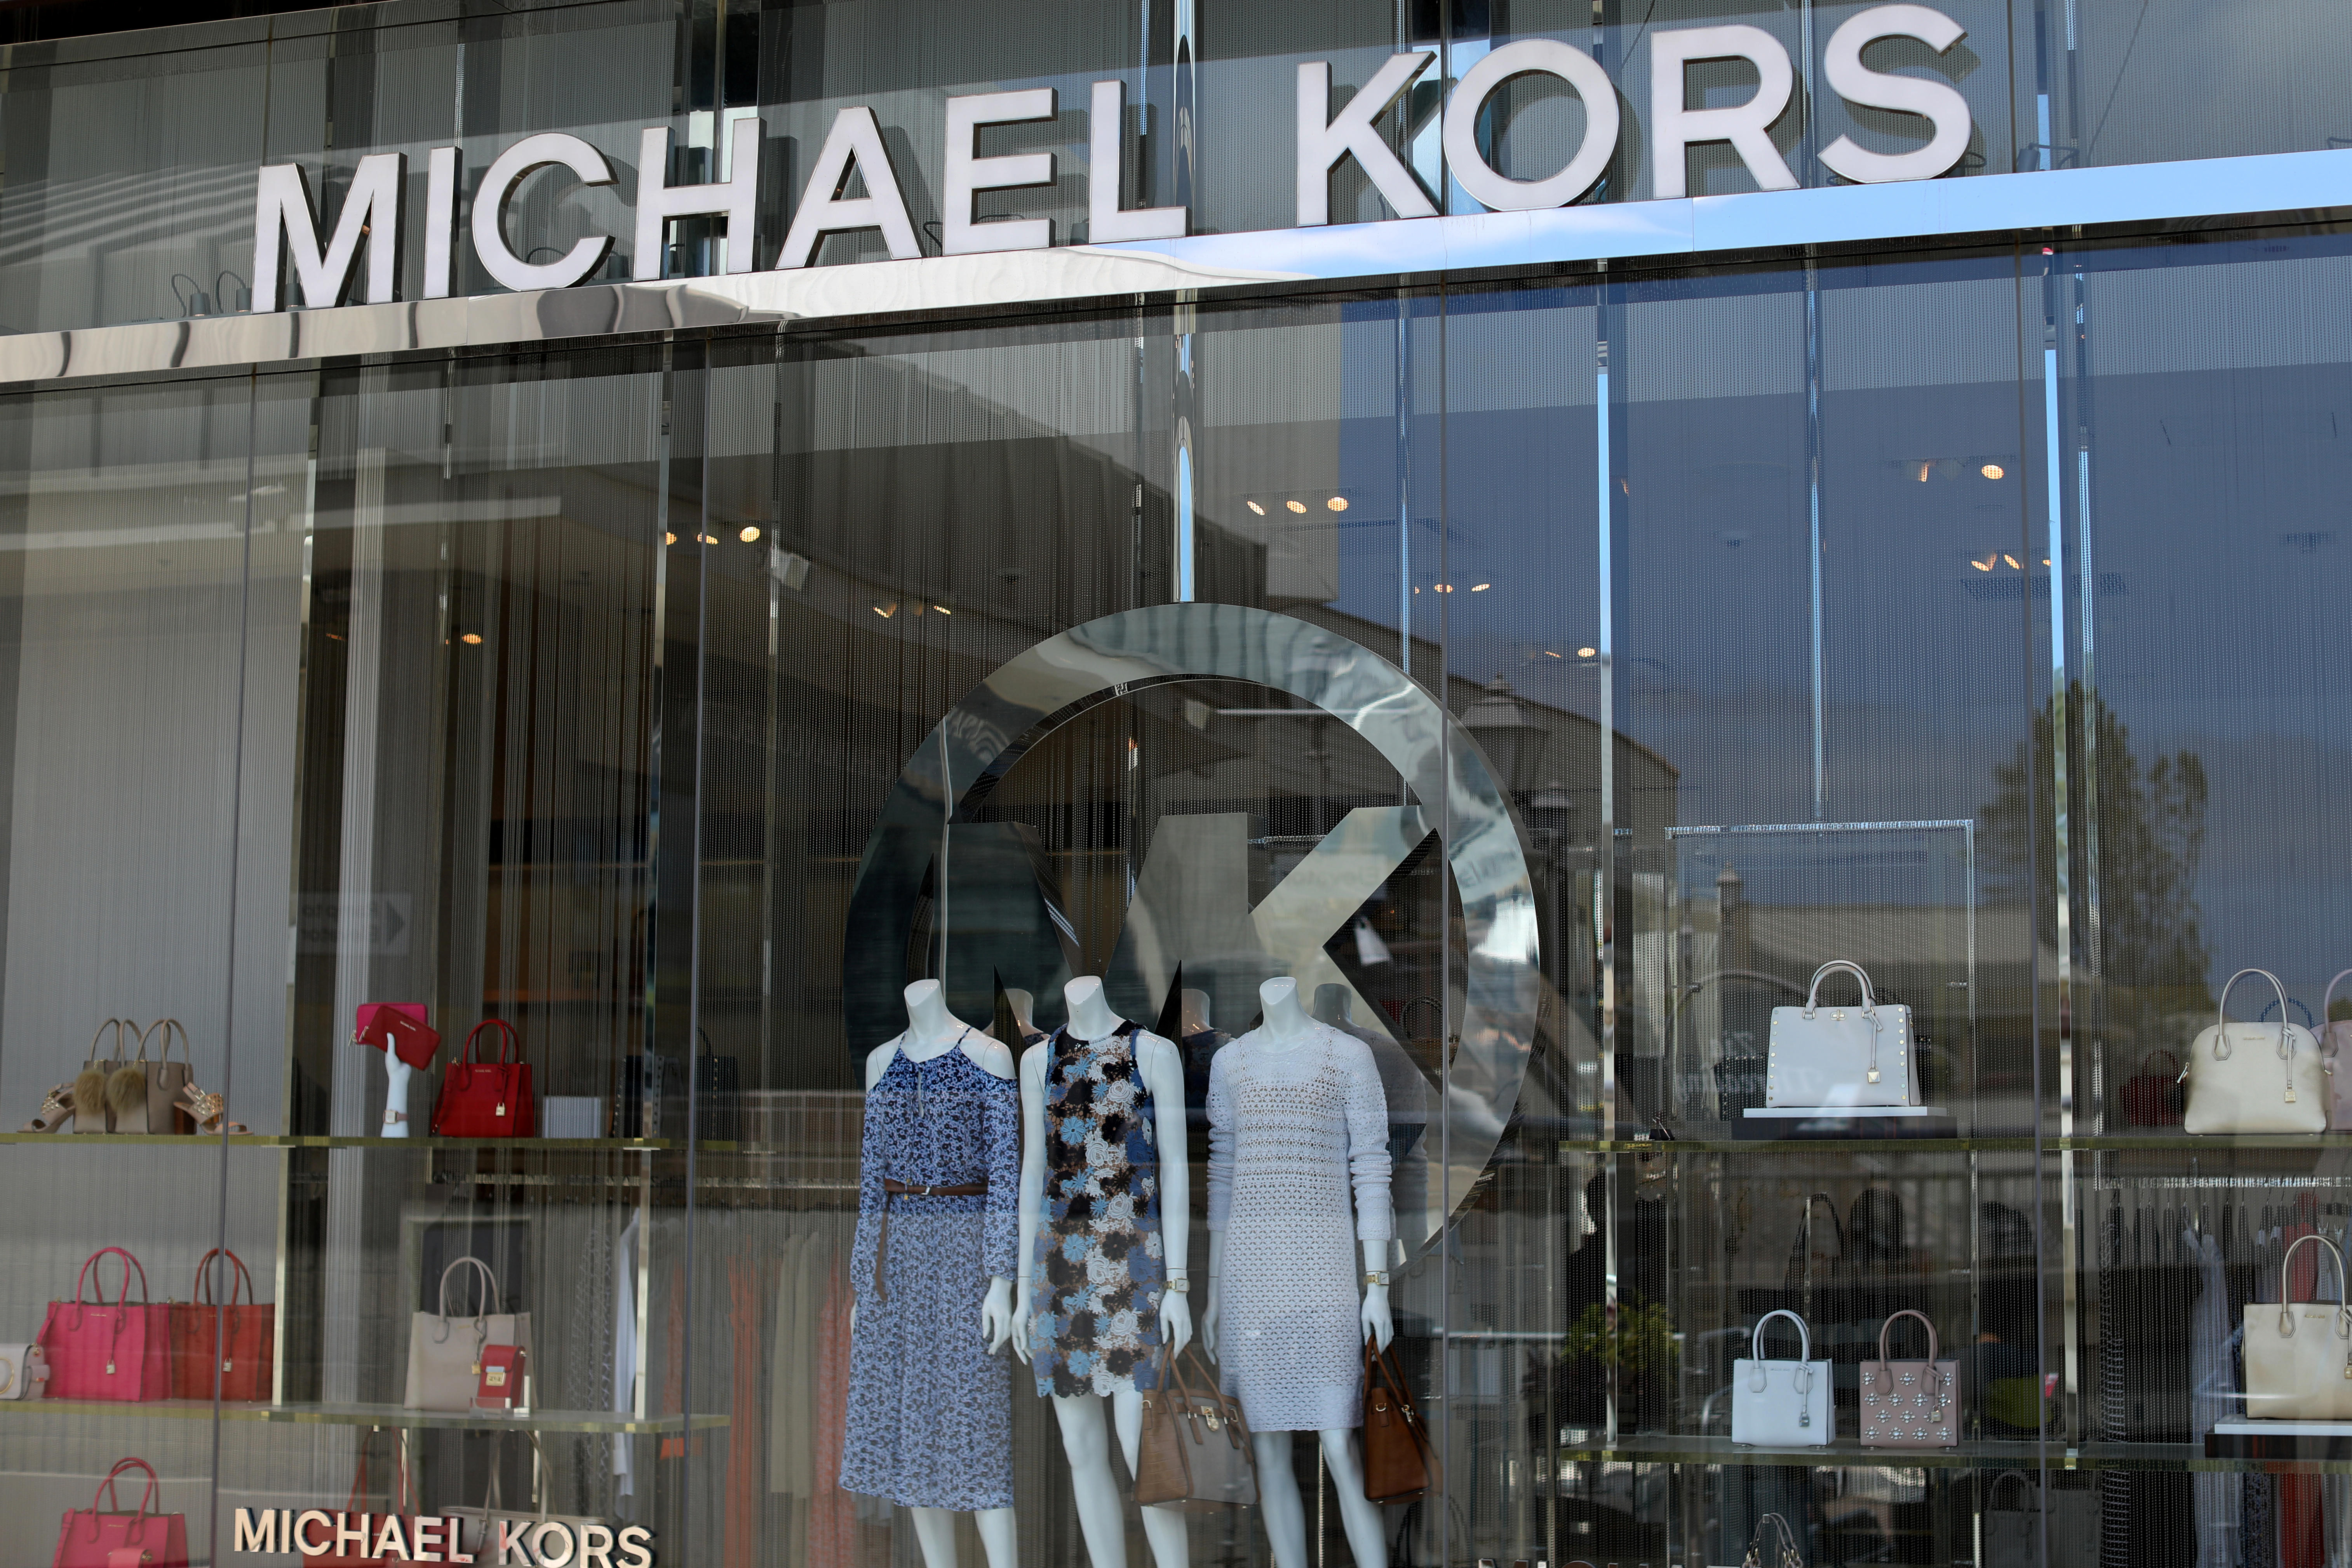 Michael Kors buying Versace fashion house for $2 billion - CBS News